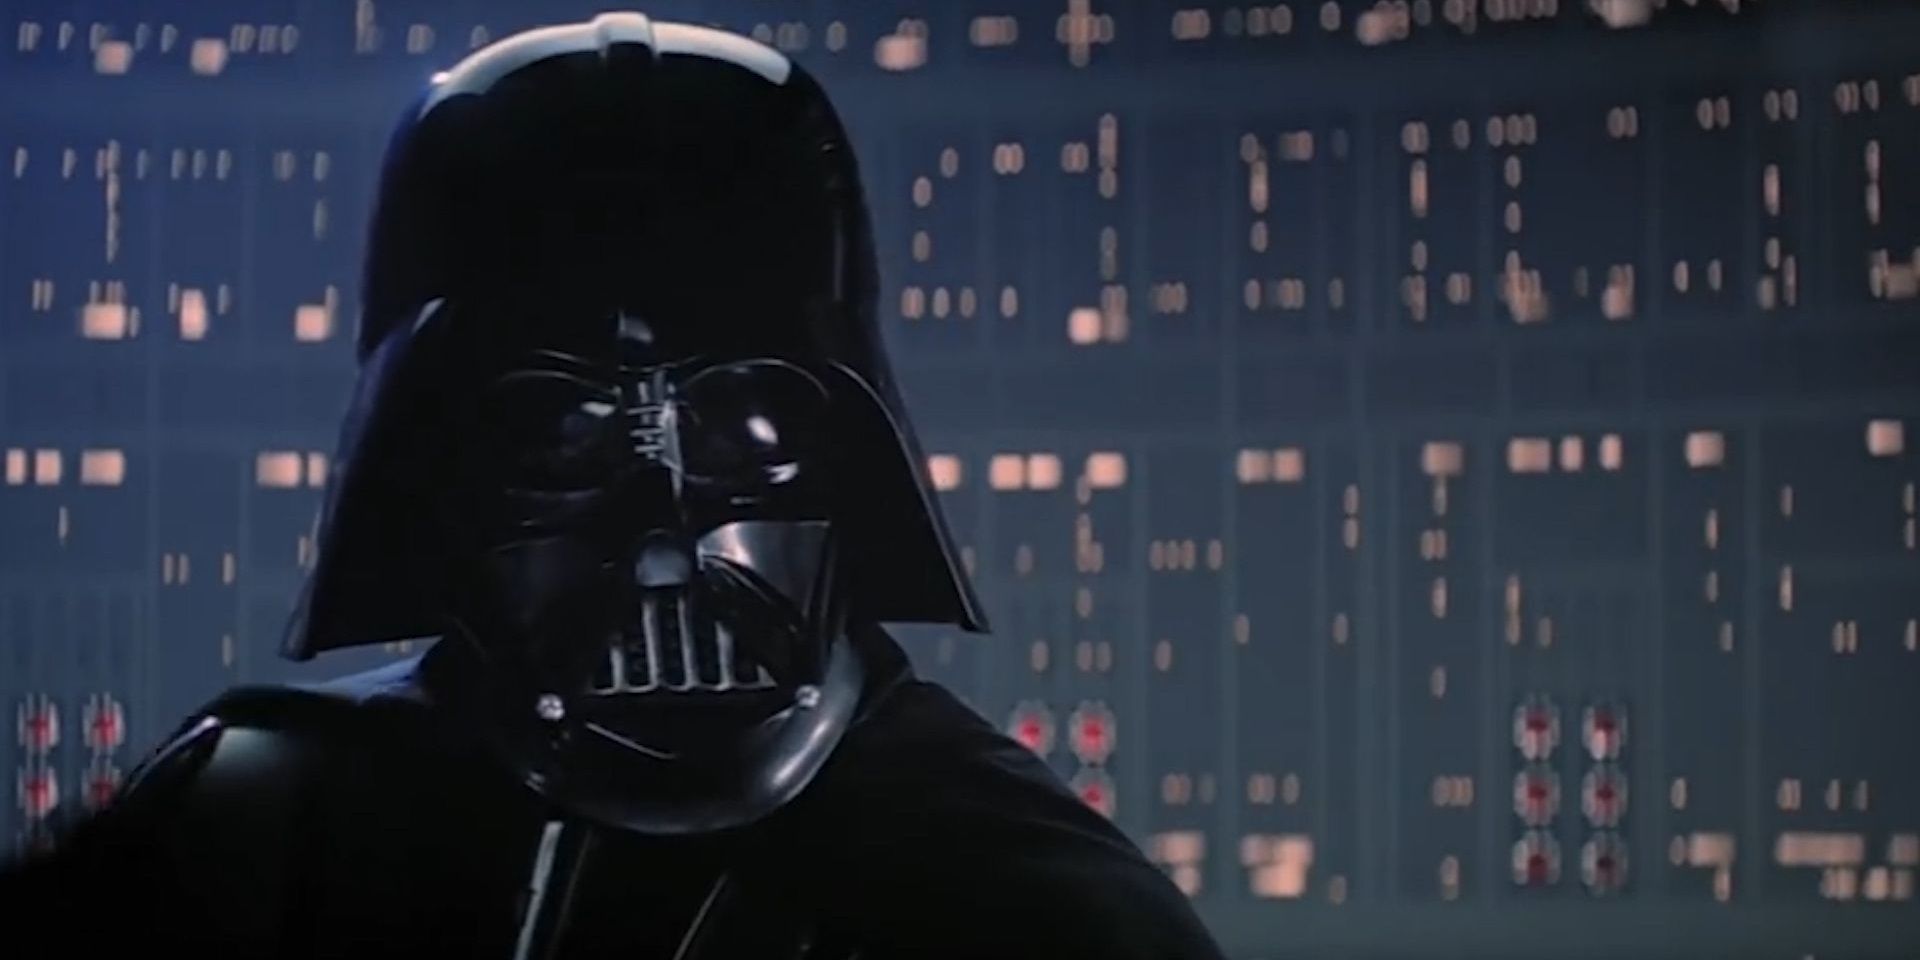 Darth-Vader-in-The-Empire-Strikes-Back